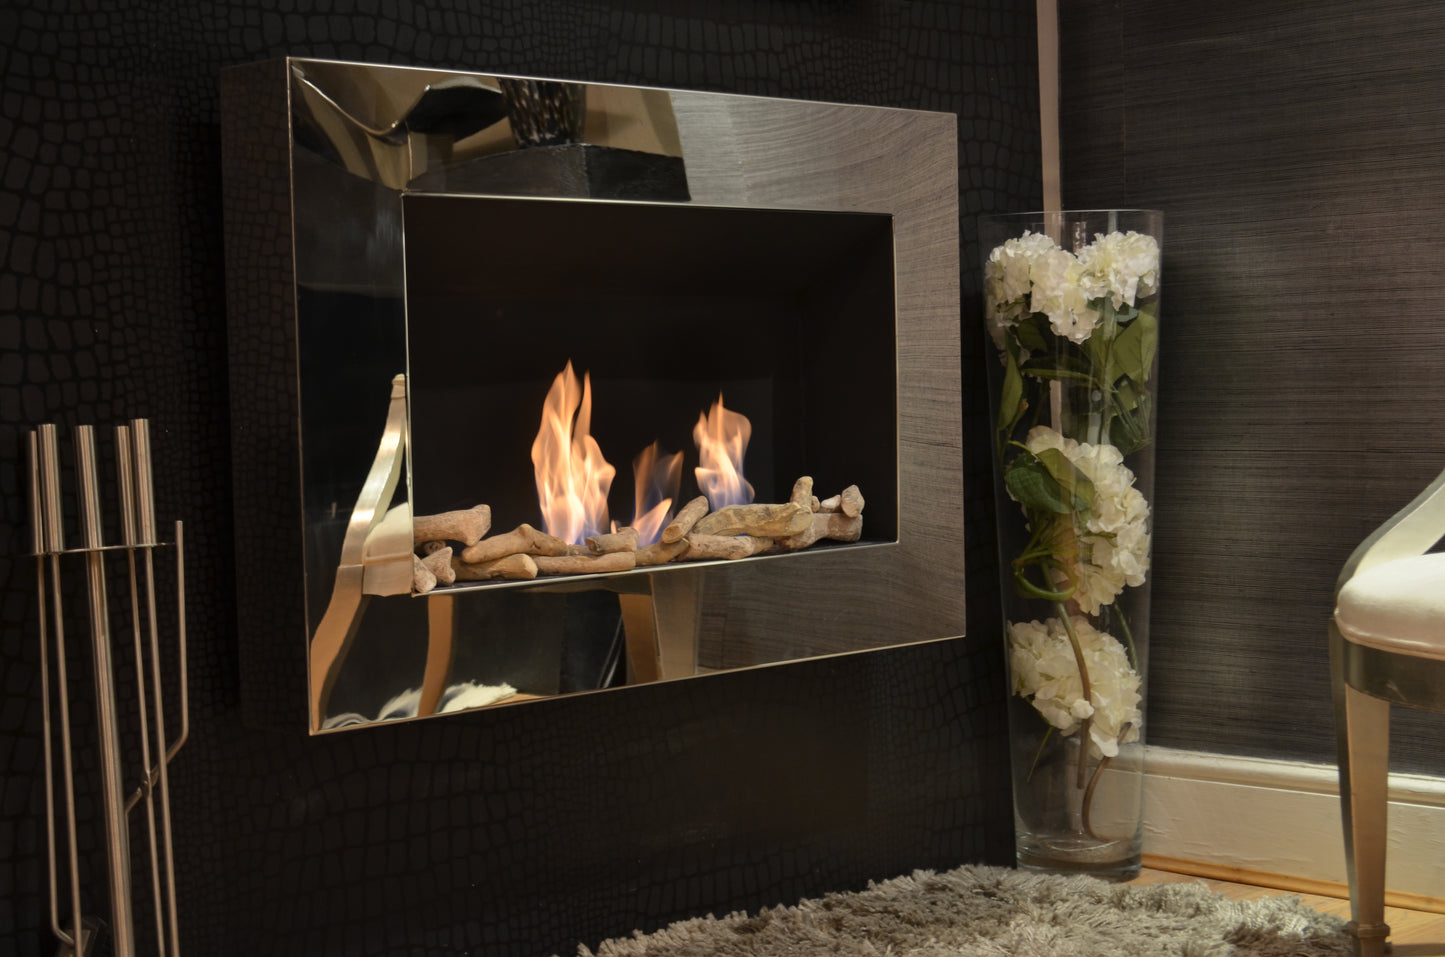 Phantom mirrored fireplace with drift wood